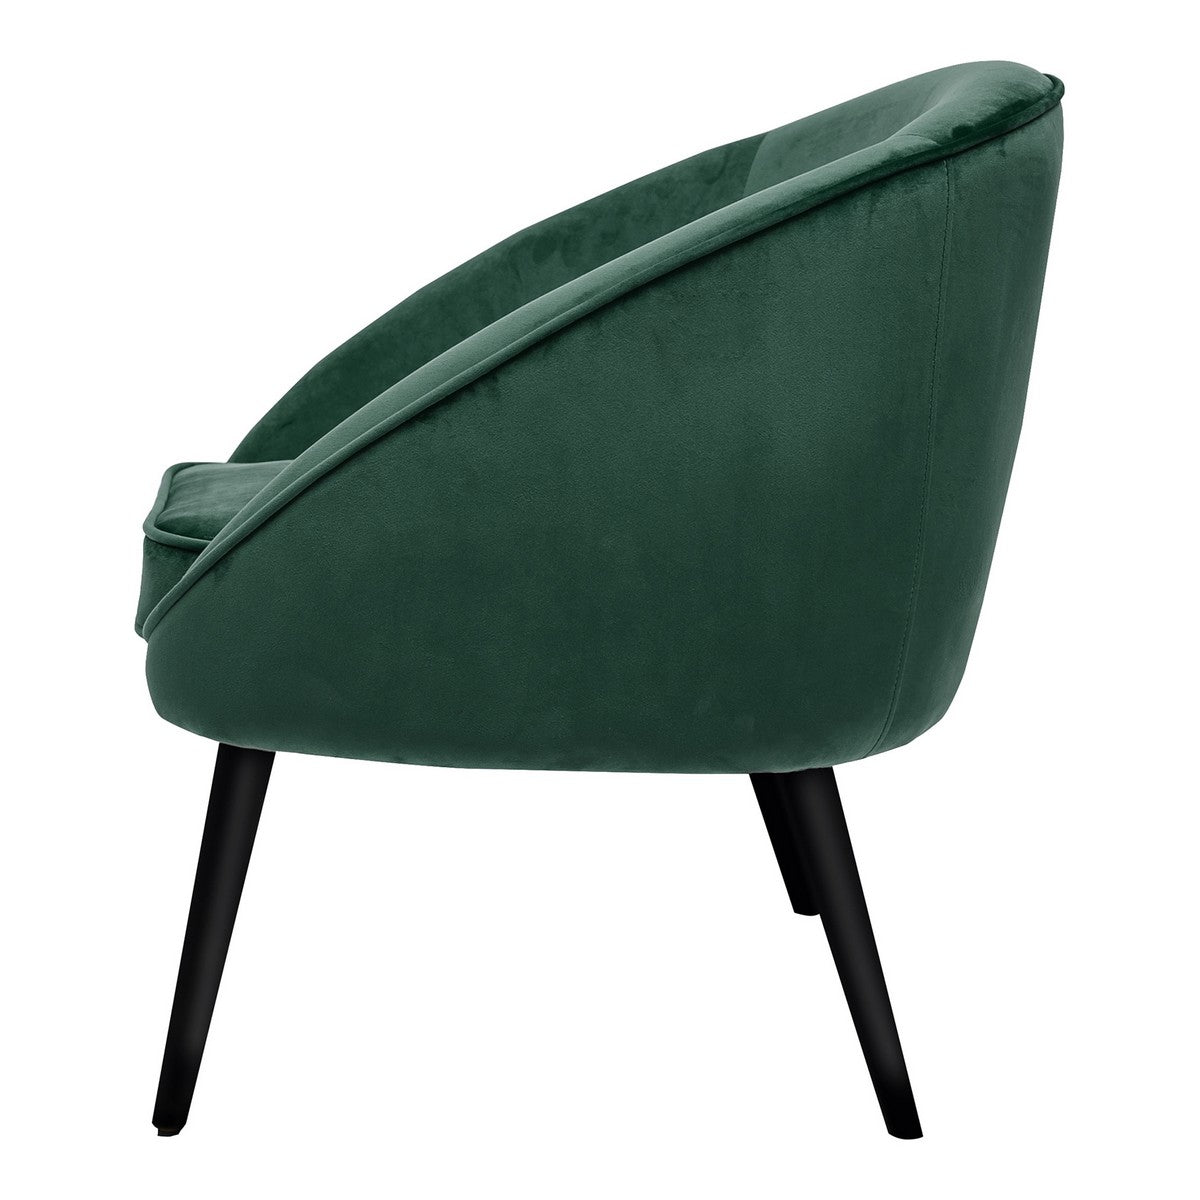 Moe's Home Collection Farah Chair Green - JW-1001-16